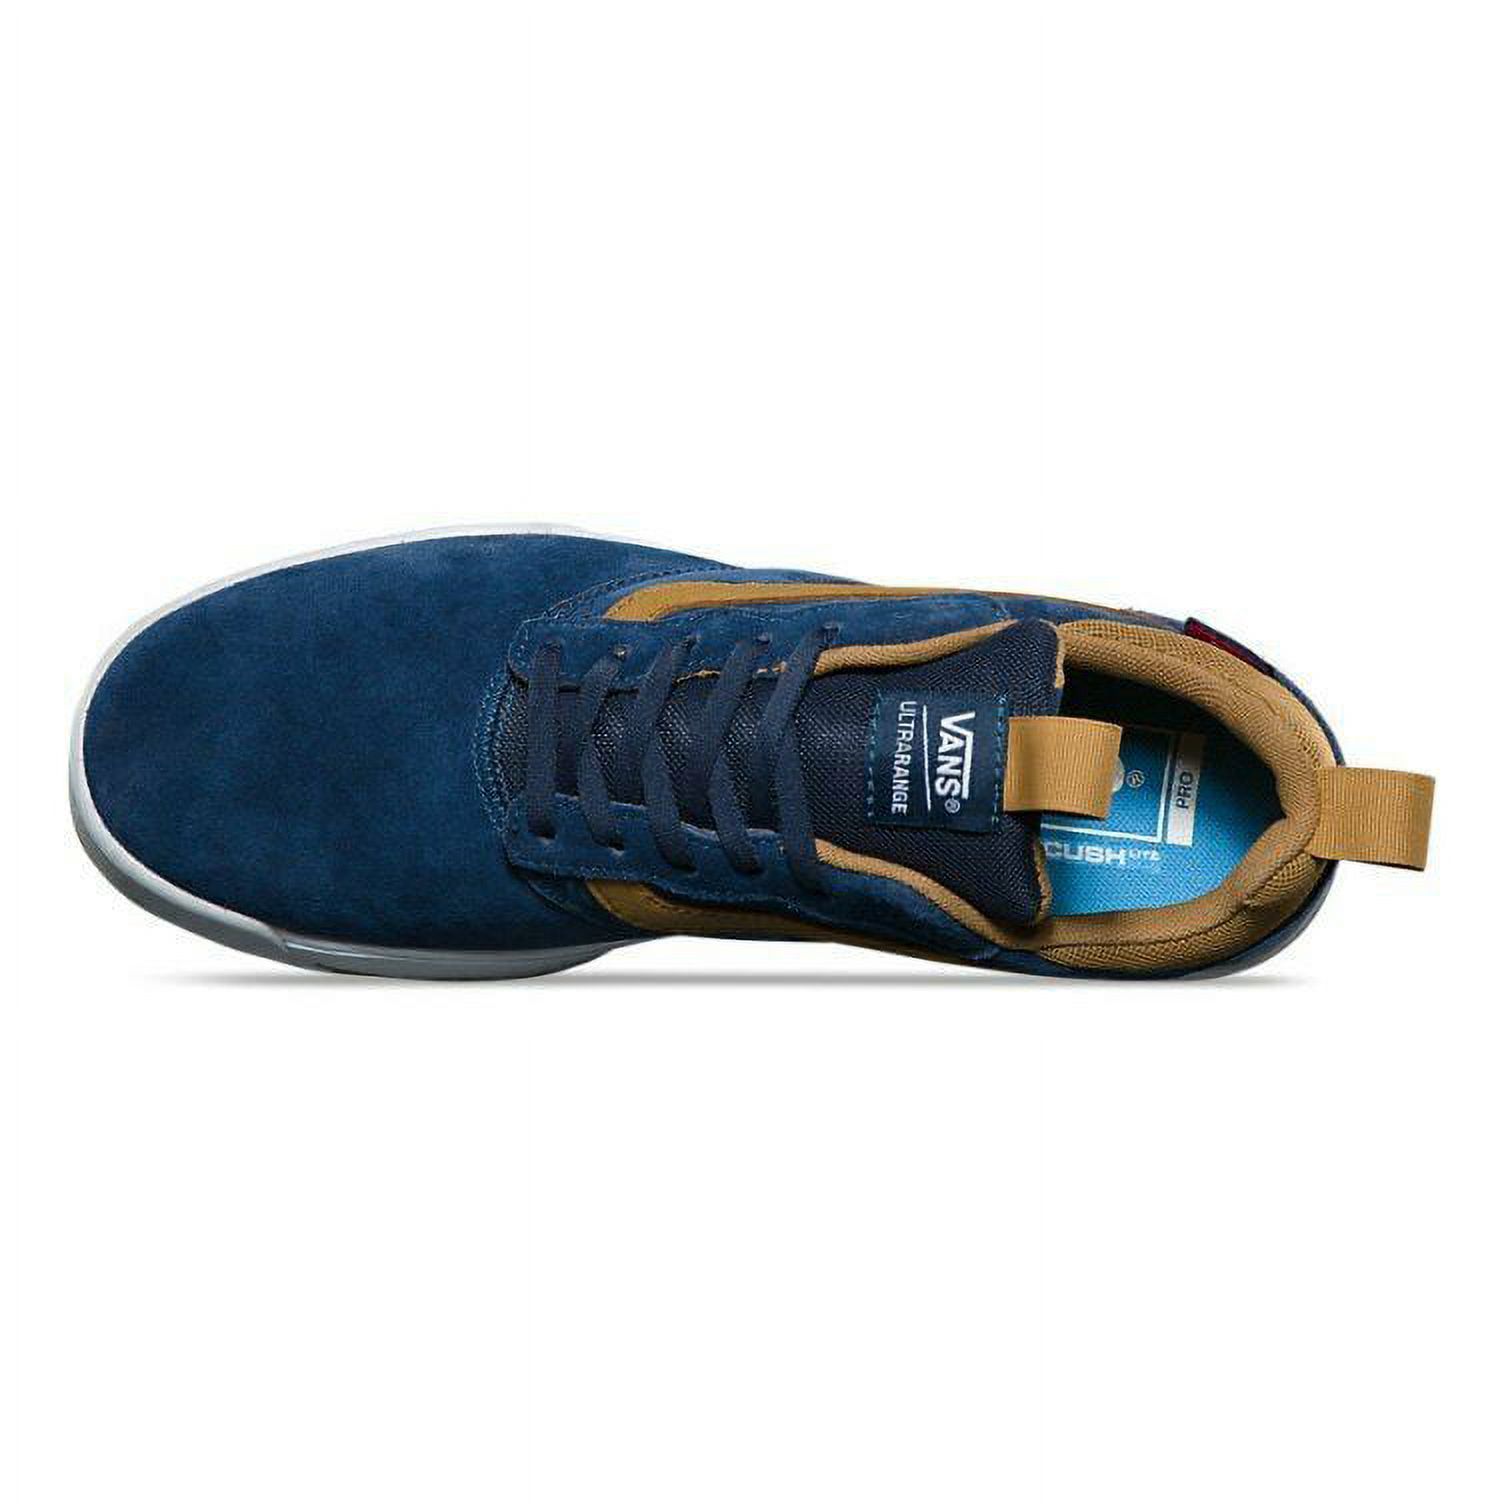 Vans UltraRange Dress Blues/Medal Bronze Men's Classic Skate Shoes Size 6.5 - image 3 of 5